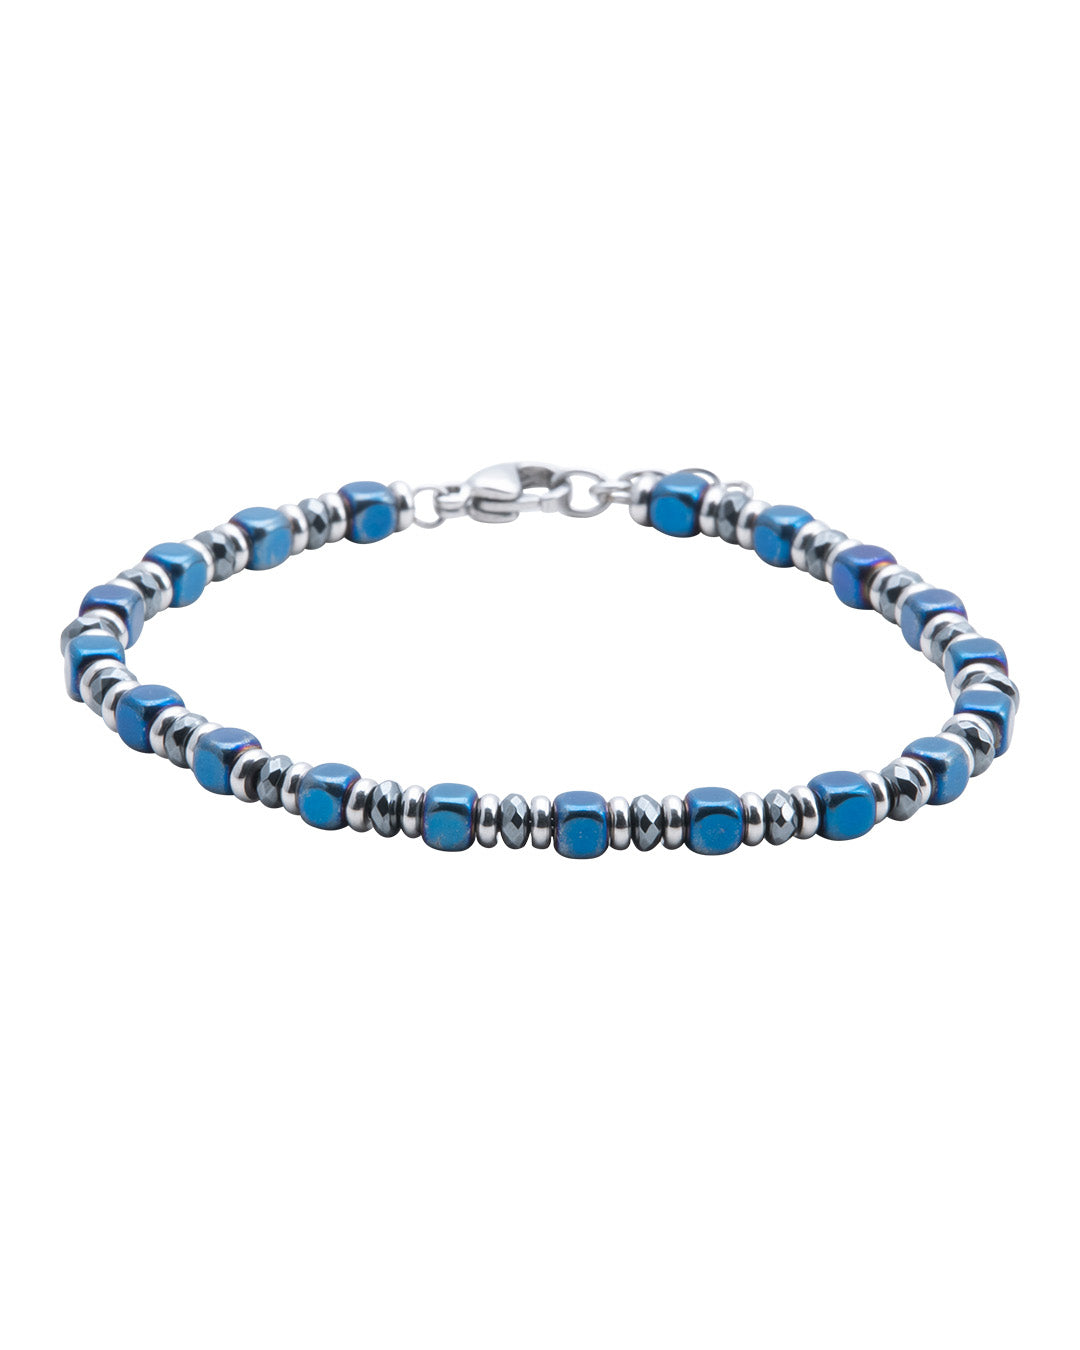 Blue Hematite Stone & Stainless Steel Bead Bracelet